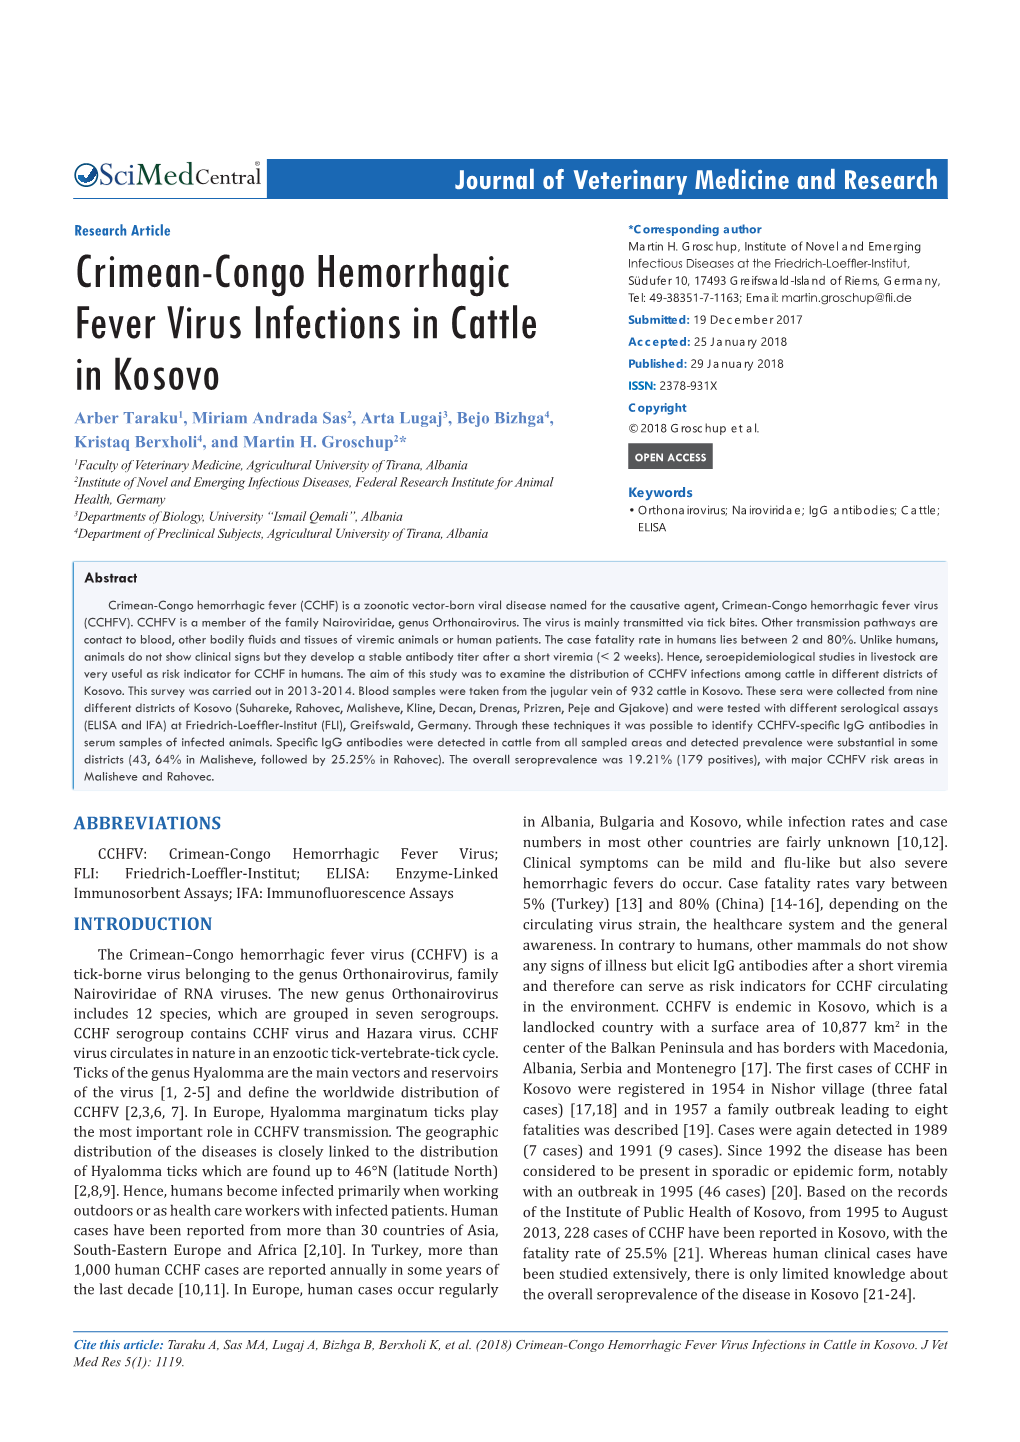 Crimean-Congo Hemorrhagic Fever Virus Infections in Cattle in Kosovo